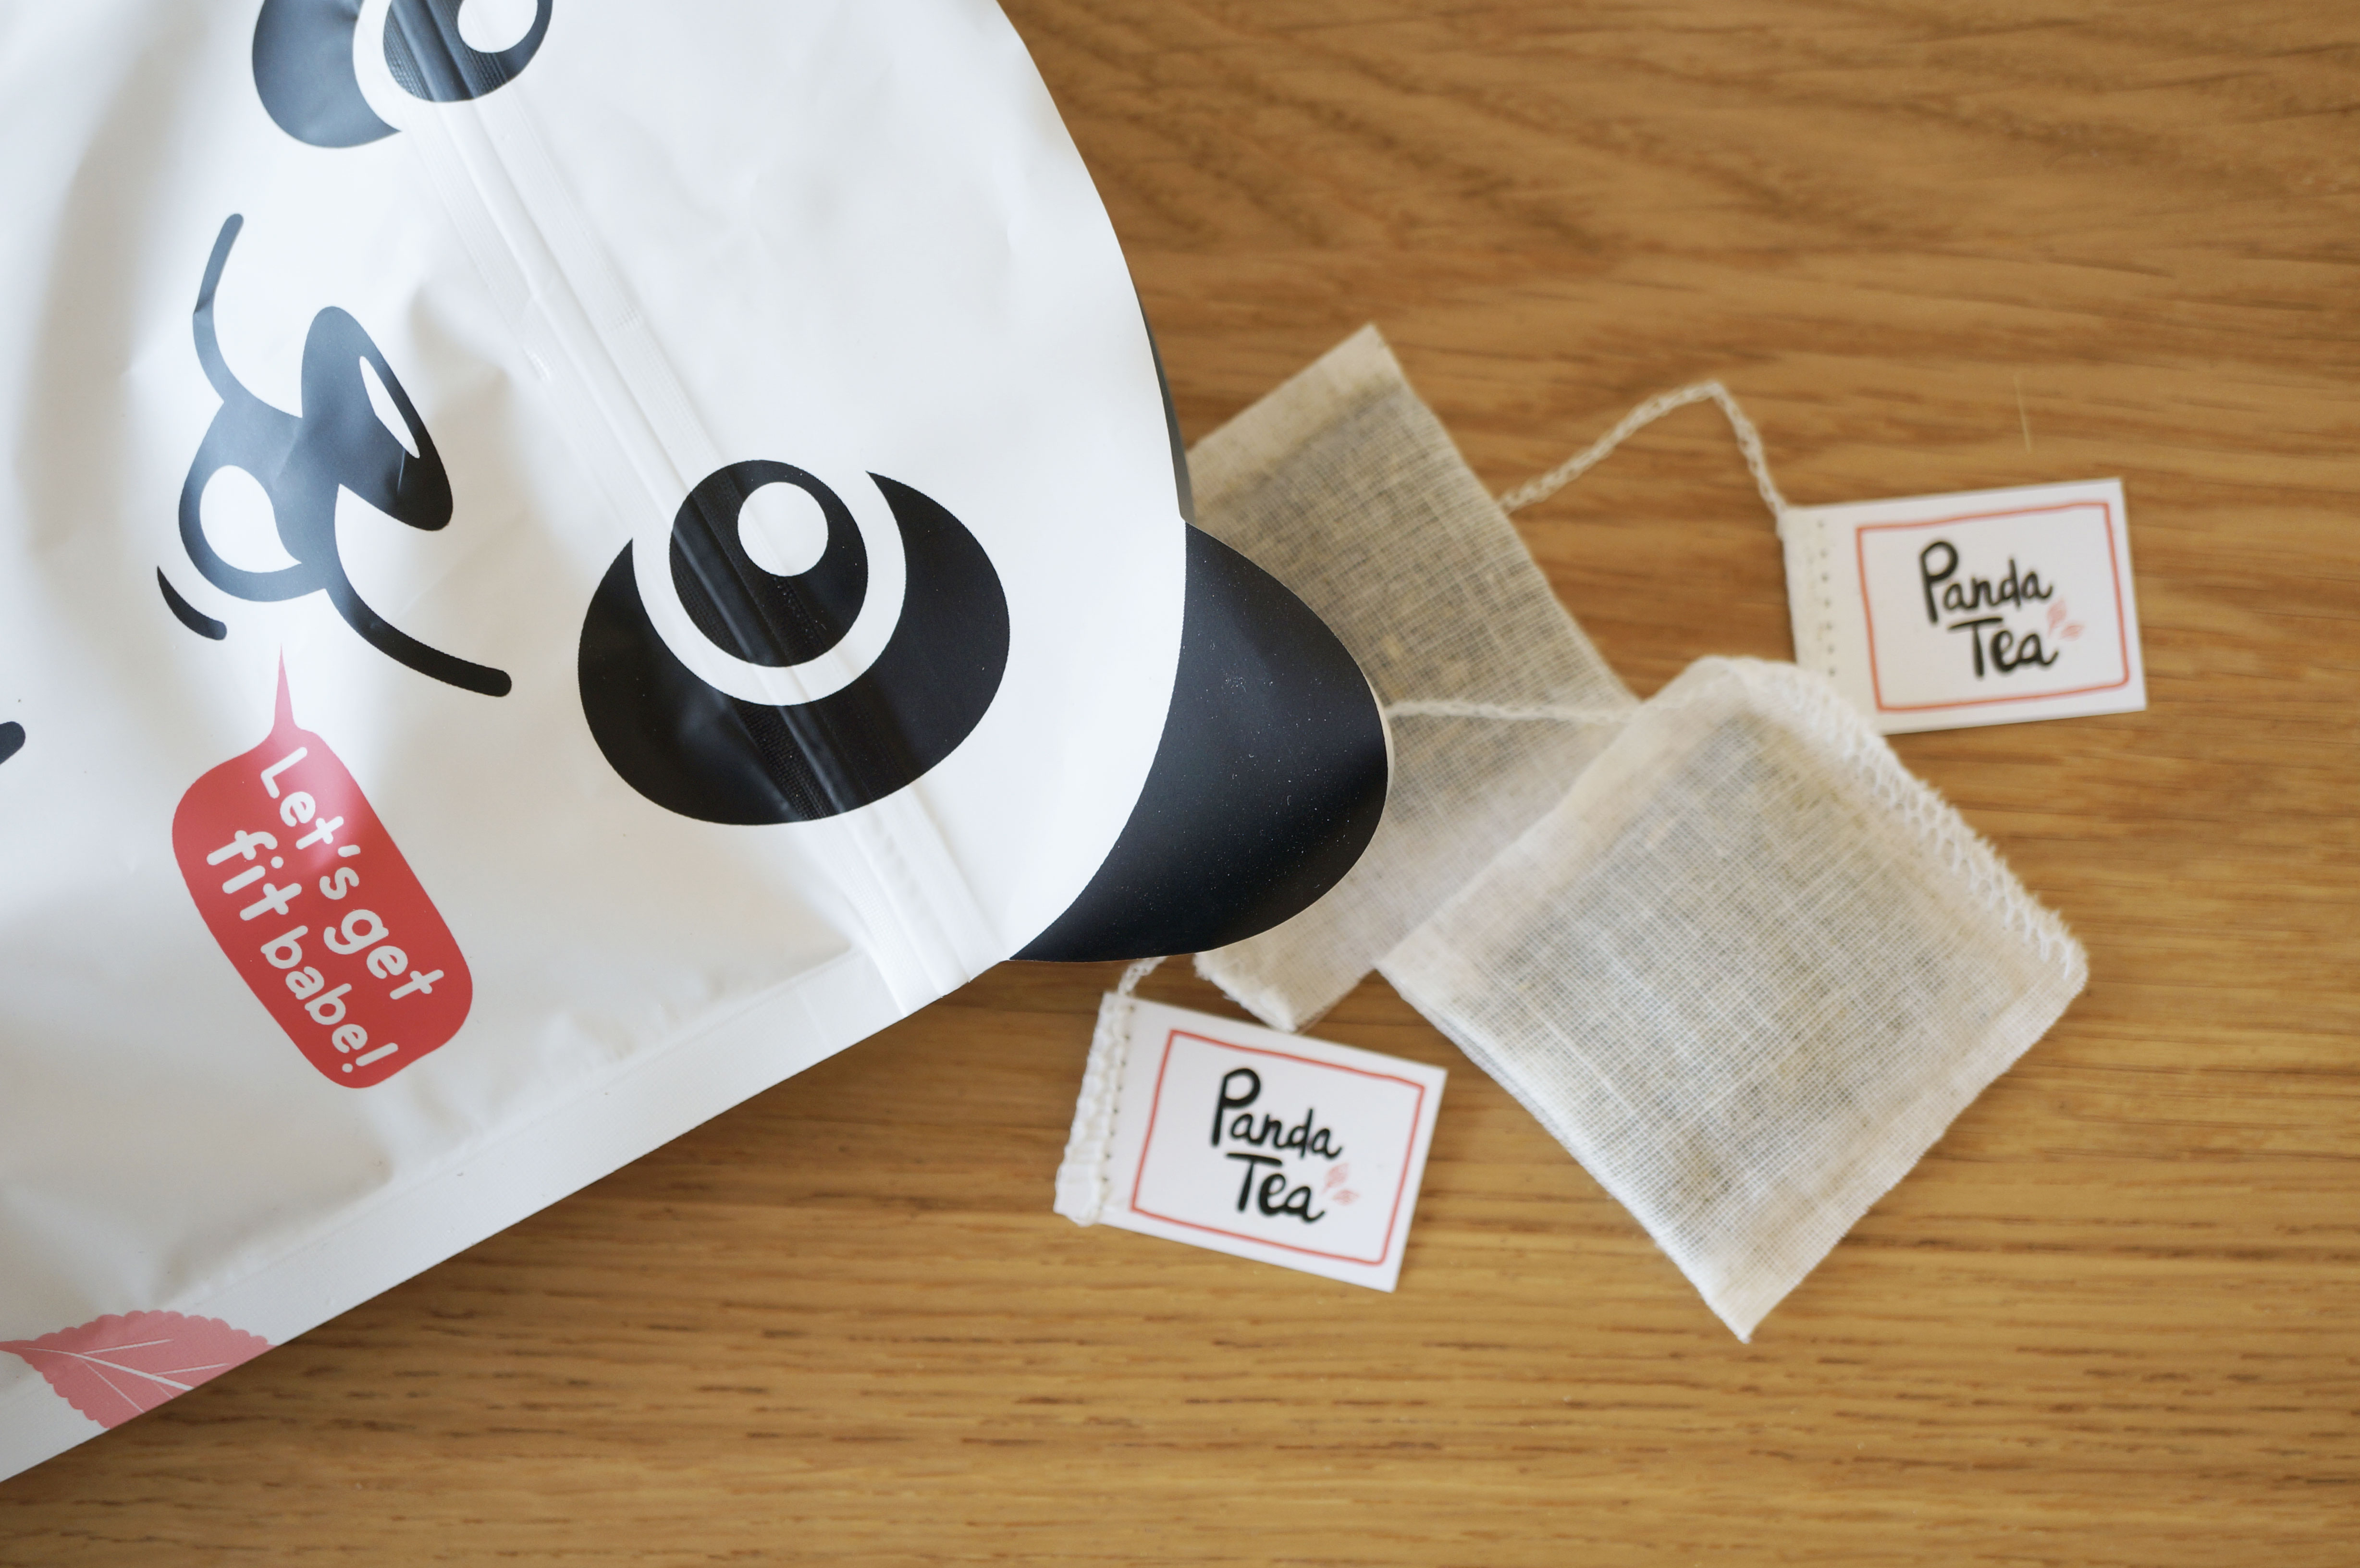 panda tea detox challenge